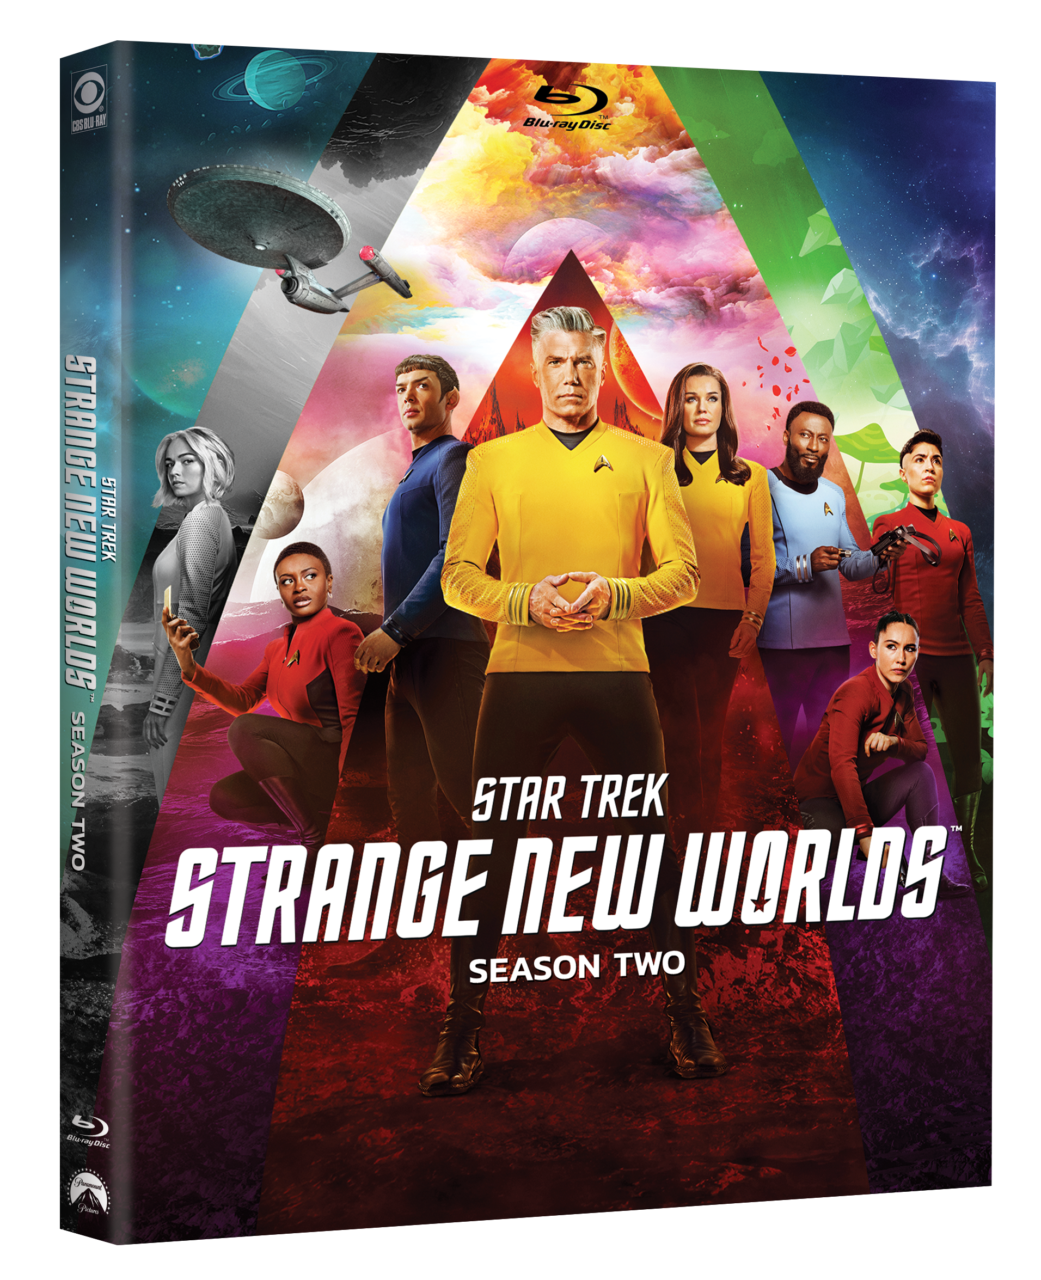 Star Trek: Strange New Worlds Season 2 Blu-Ray cover (Paramount Home Entertainment)